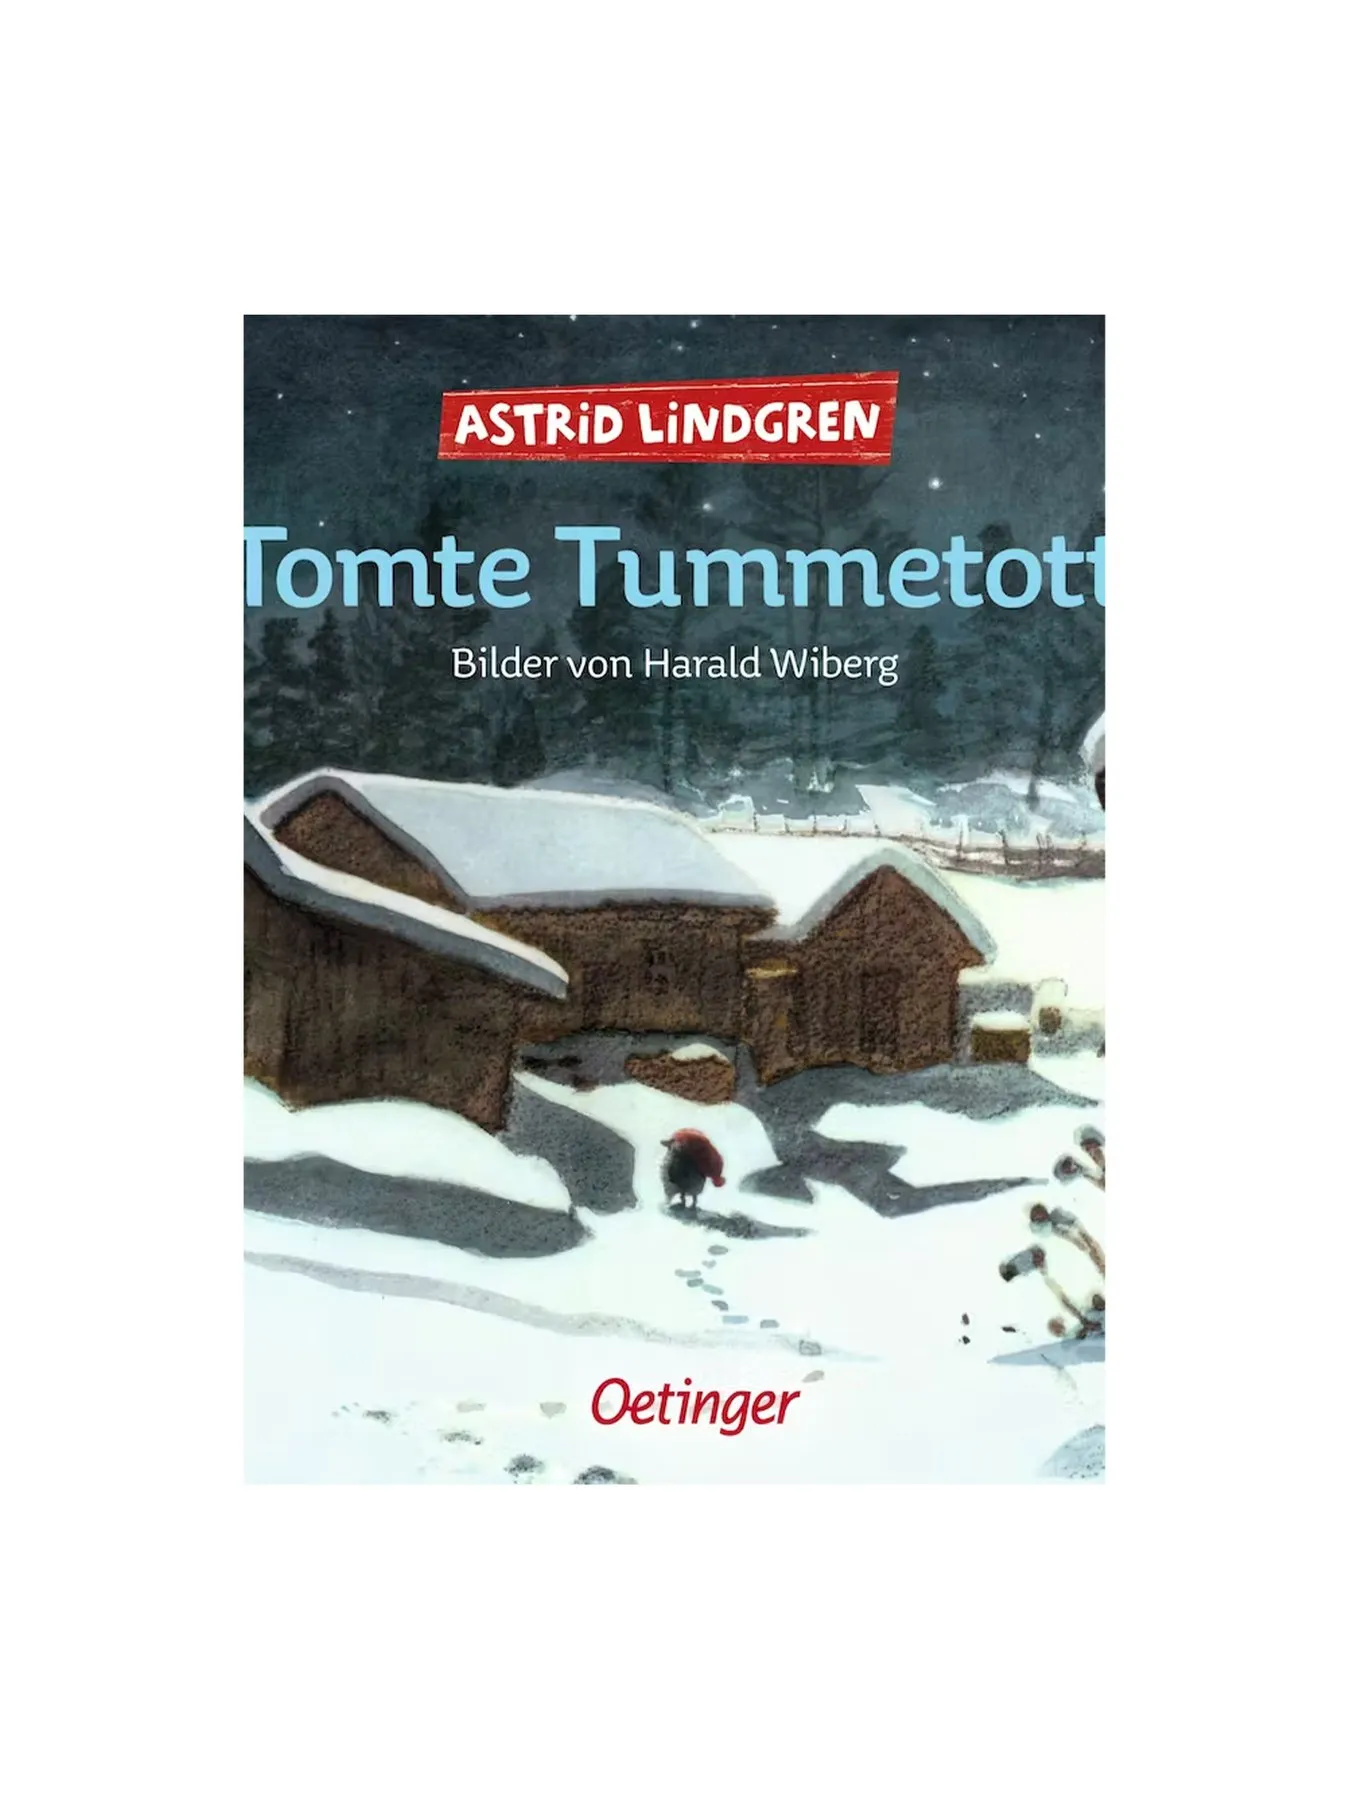 Tomte Tummetott (Harald Wiberg)